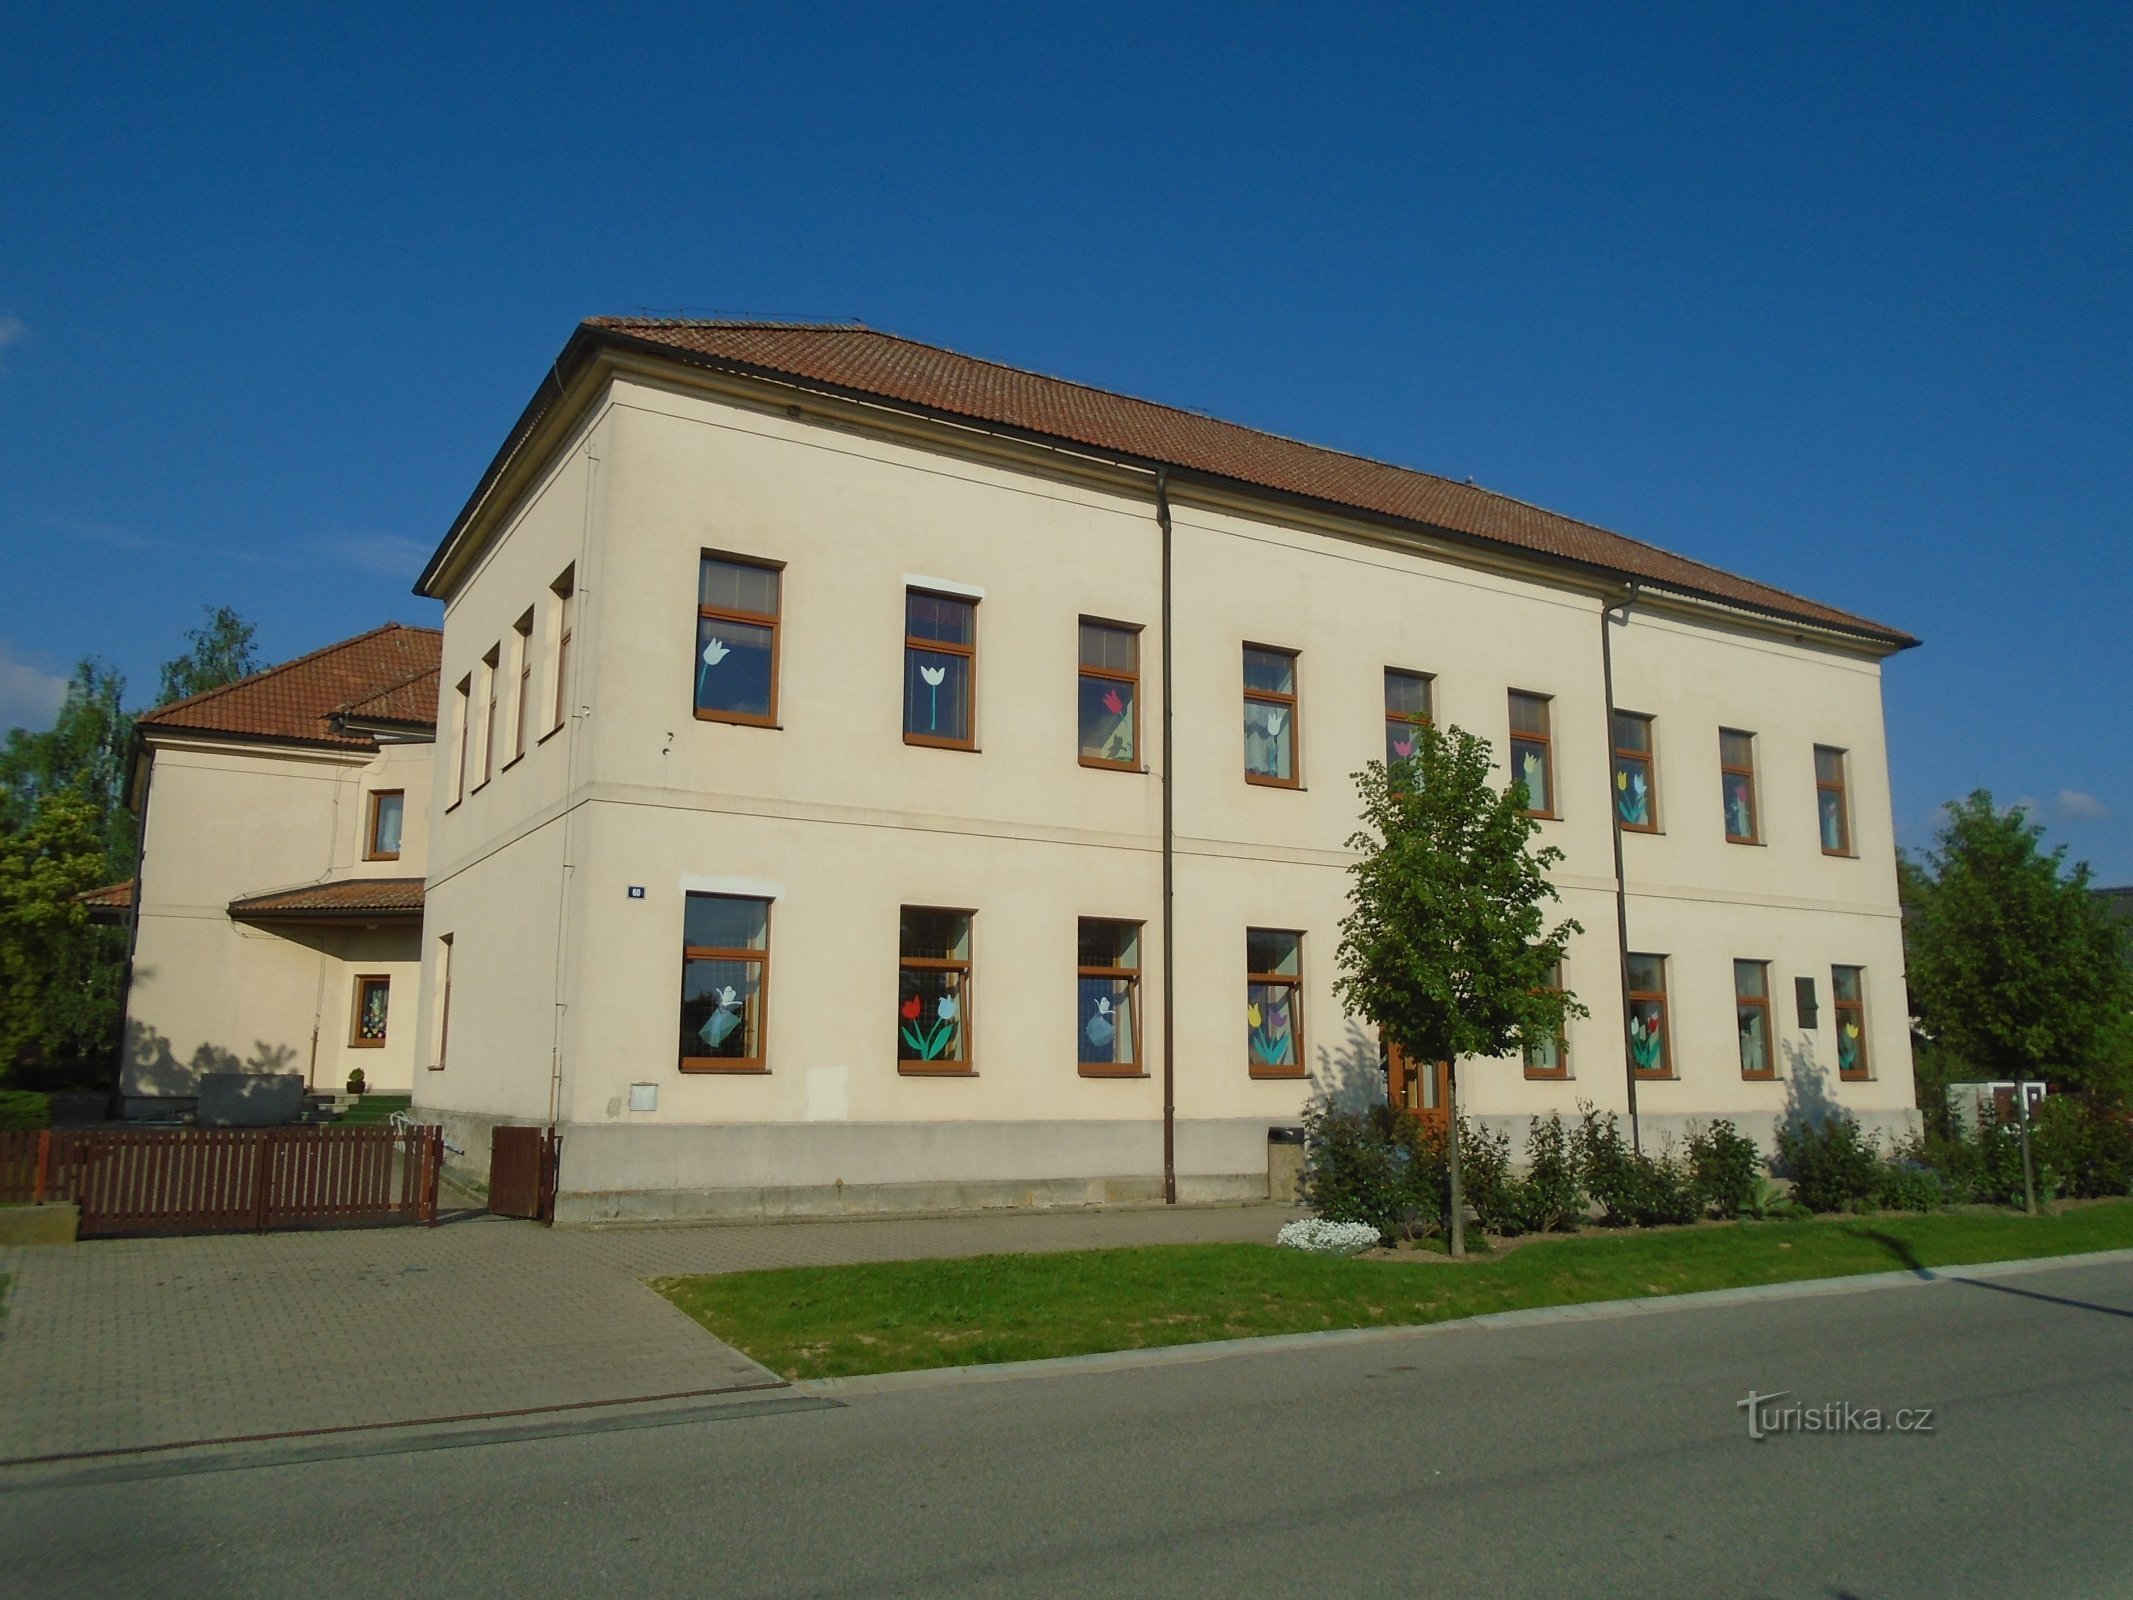 Școală (Praskačka)